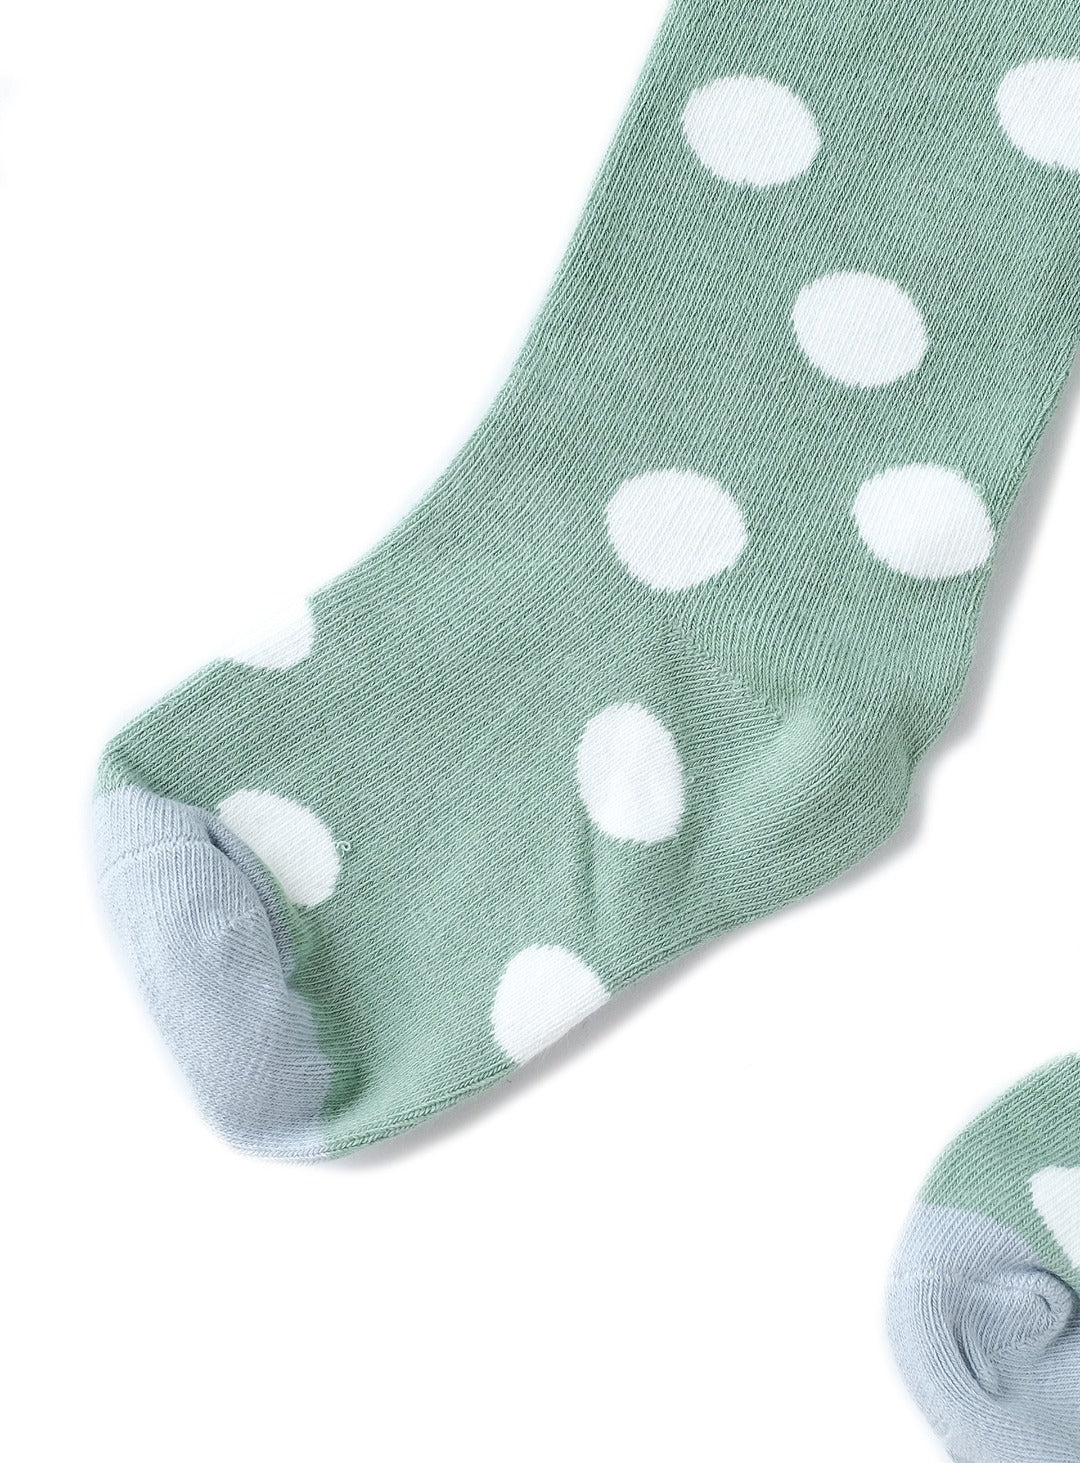 tea green socks with white dots